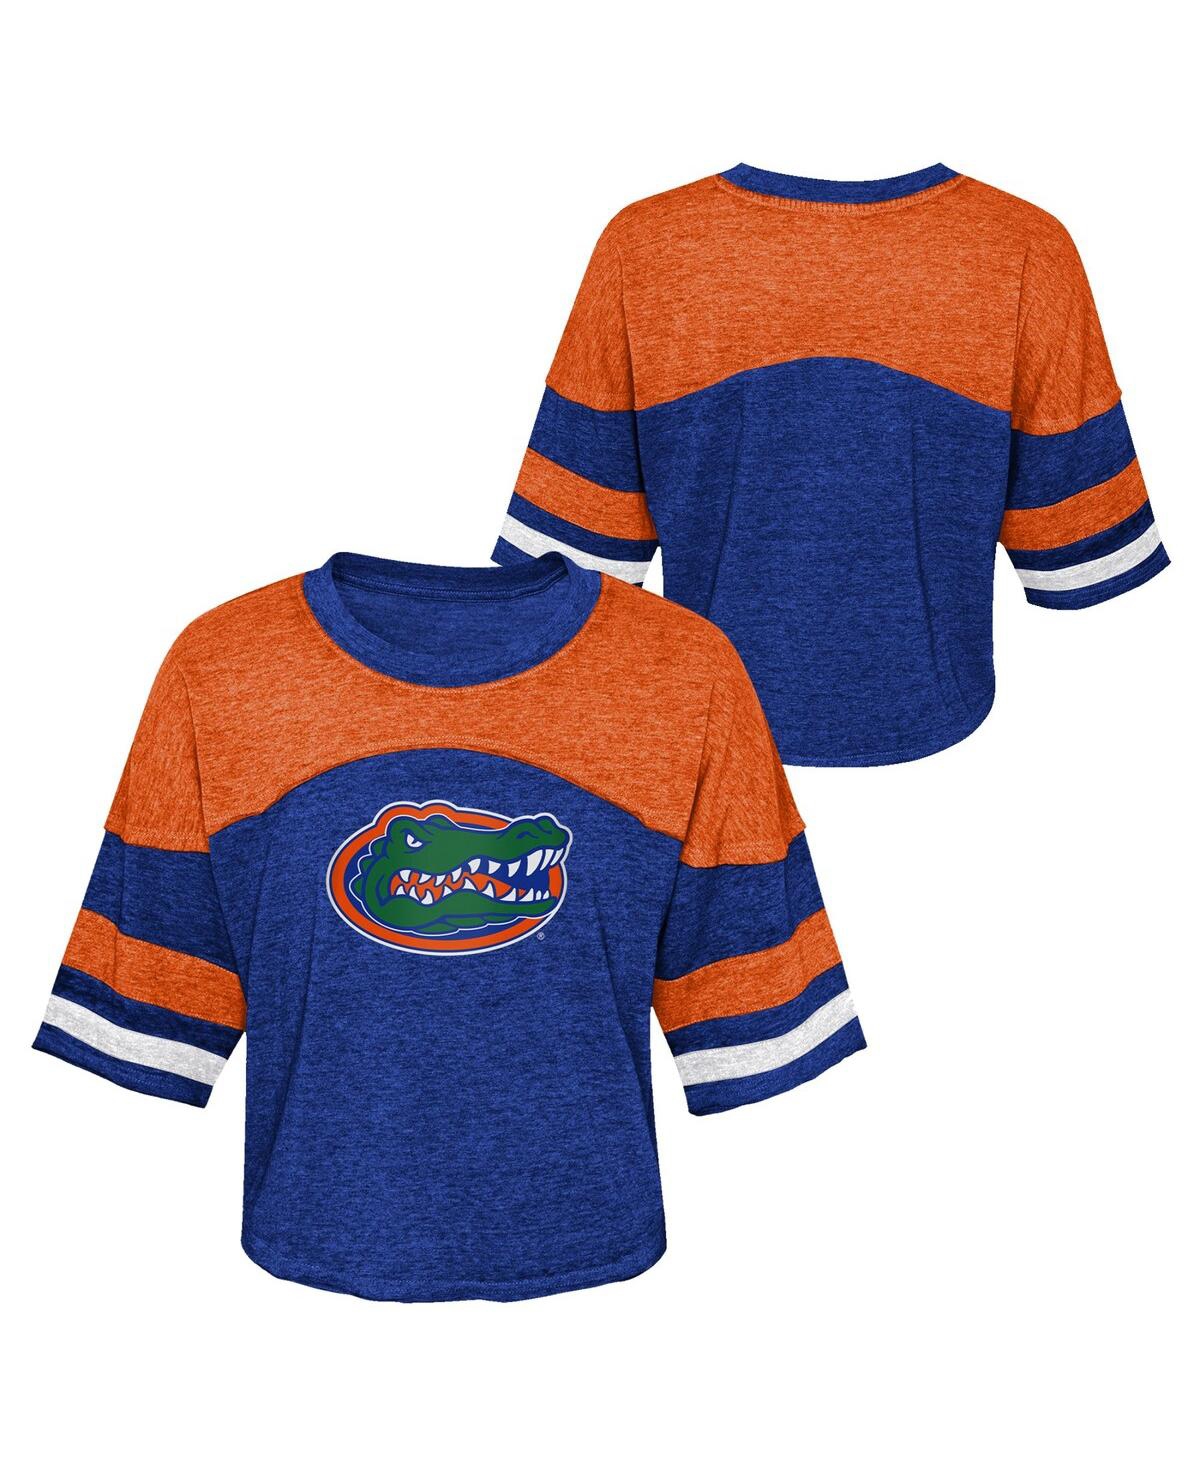 Outerstuff Kids' Big Girls Royal Distressed Florida Gators Sunday Friday Sleeve Stripe Jersey T-shirt